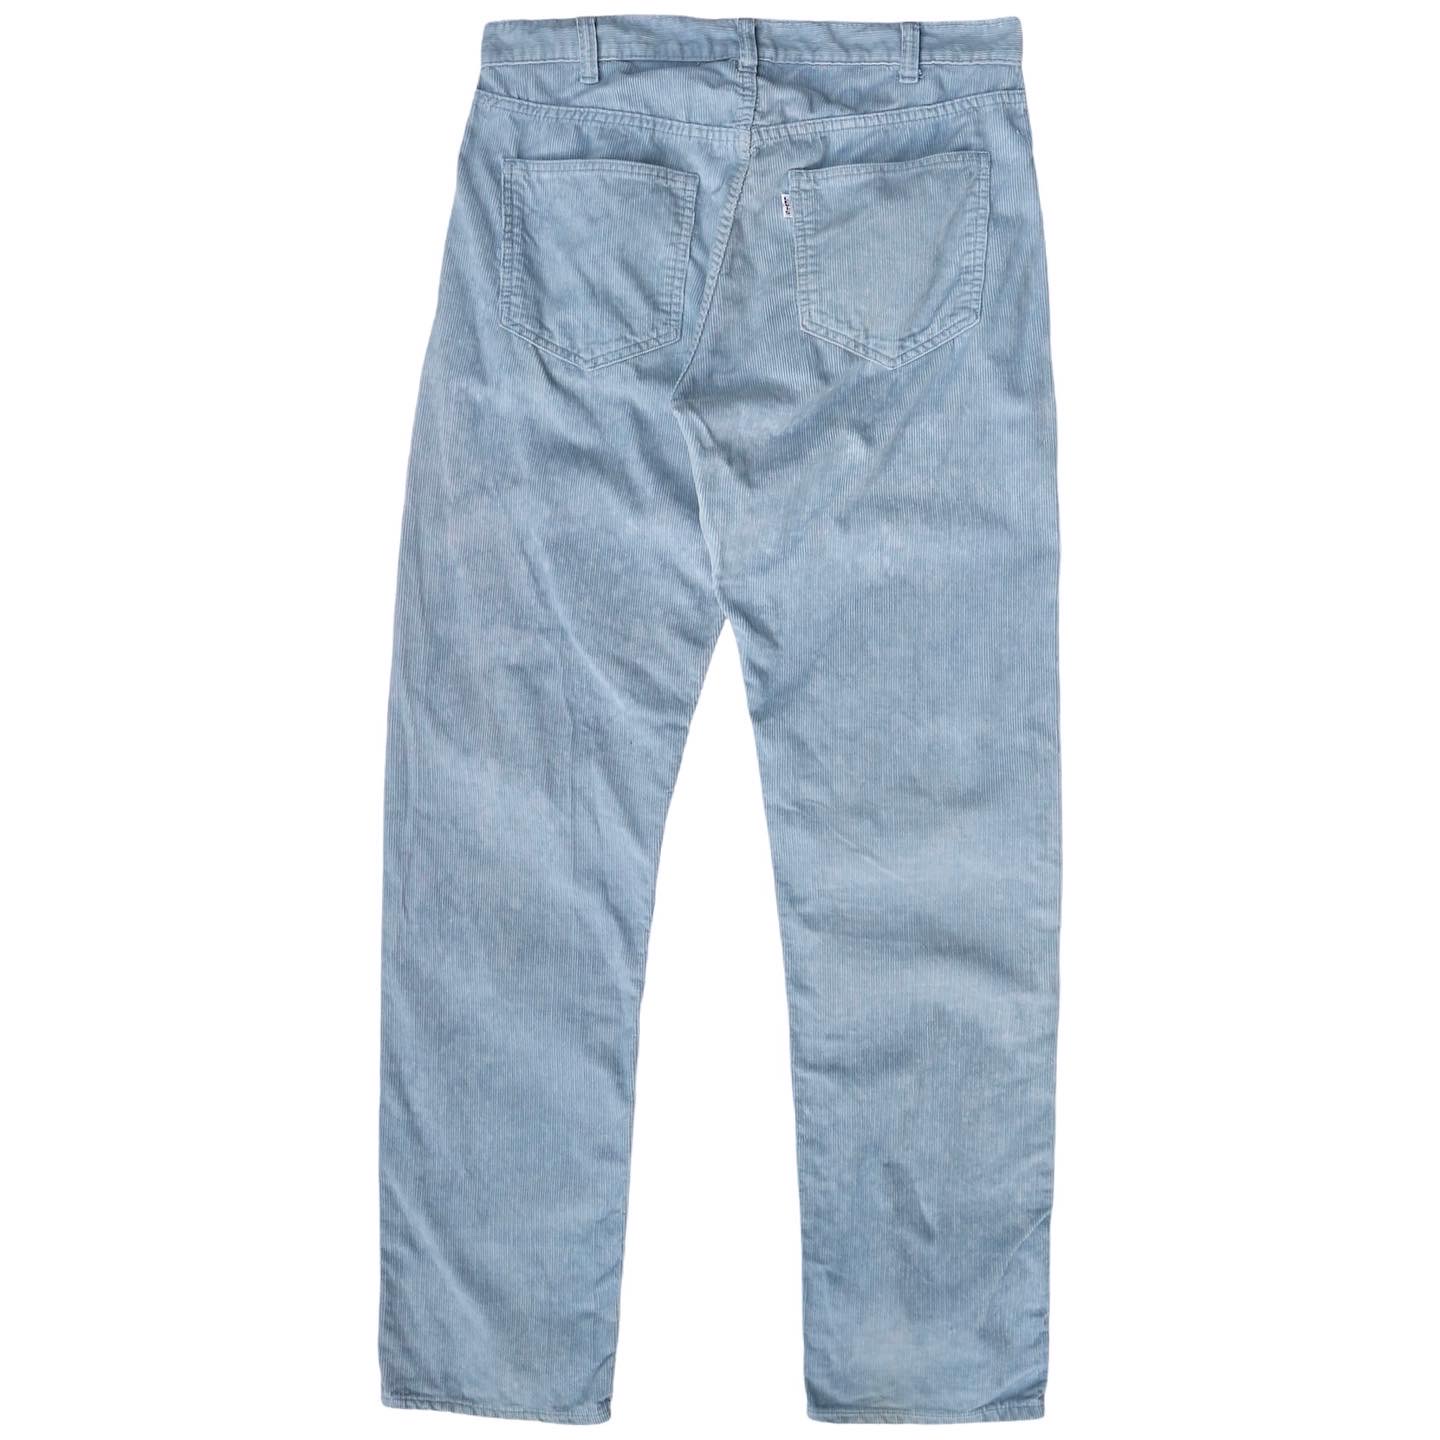 90s LEVI'S Corduroy Pants Size 33 denimister